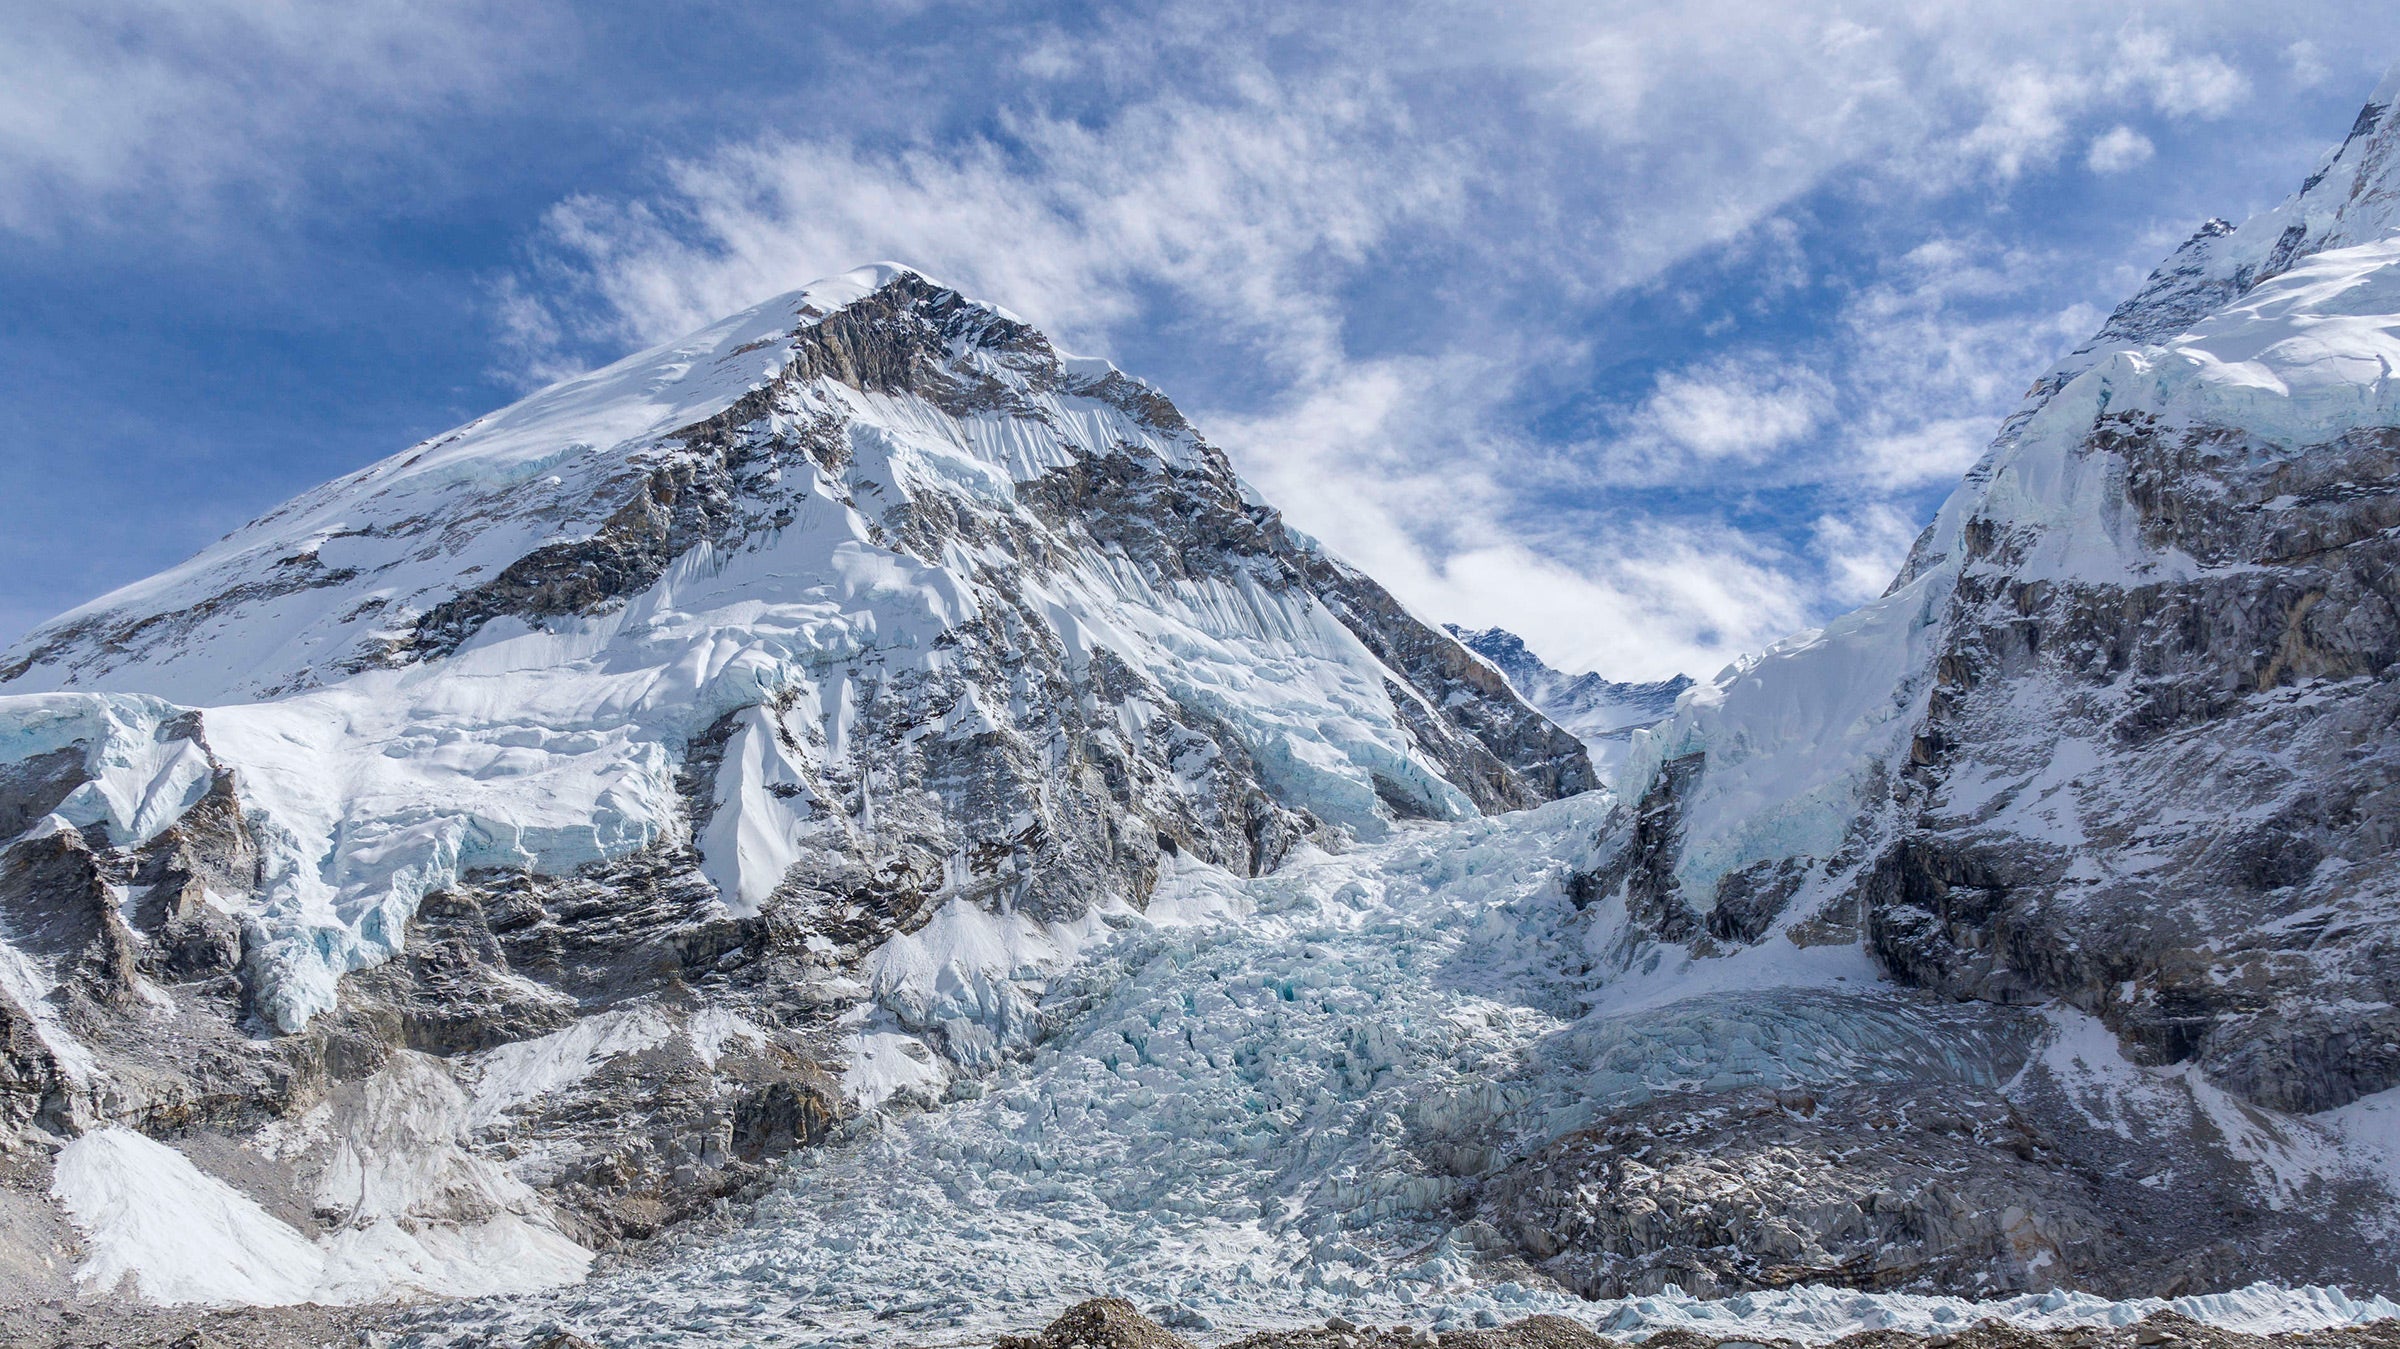 The Khumbu Icefall below Mount Everest